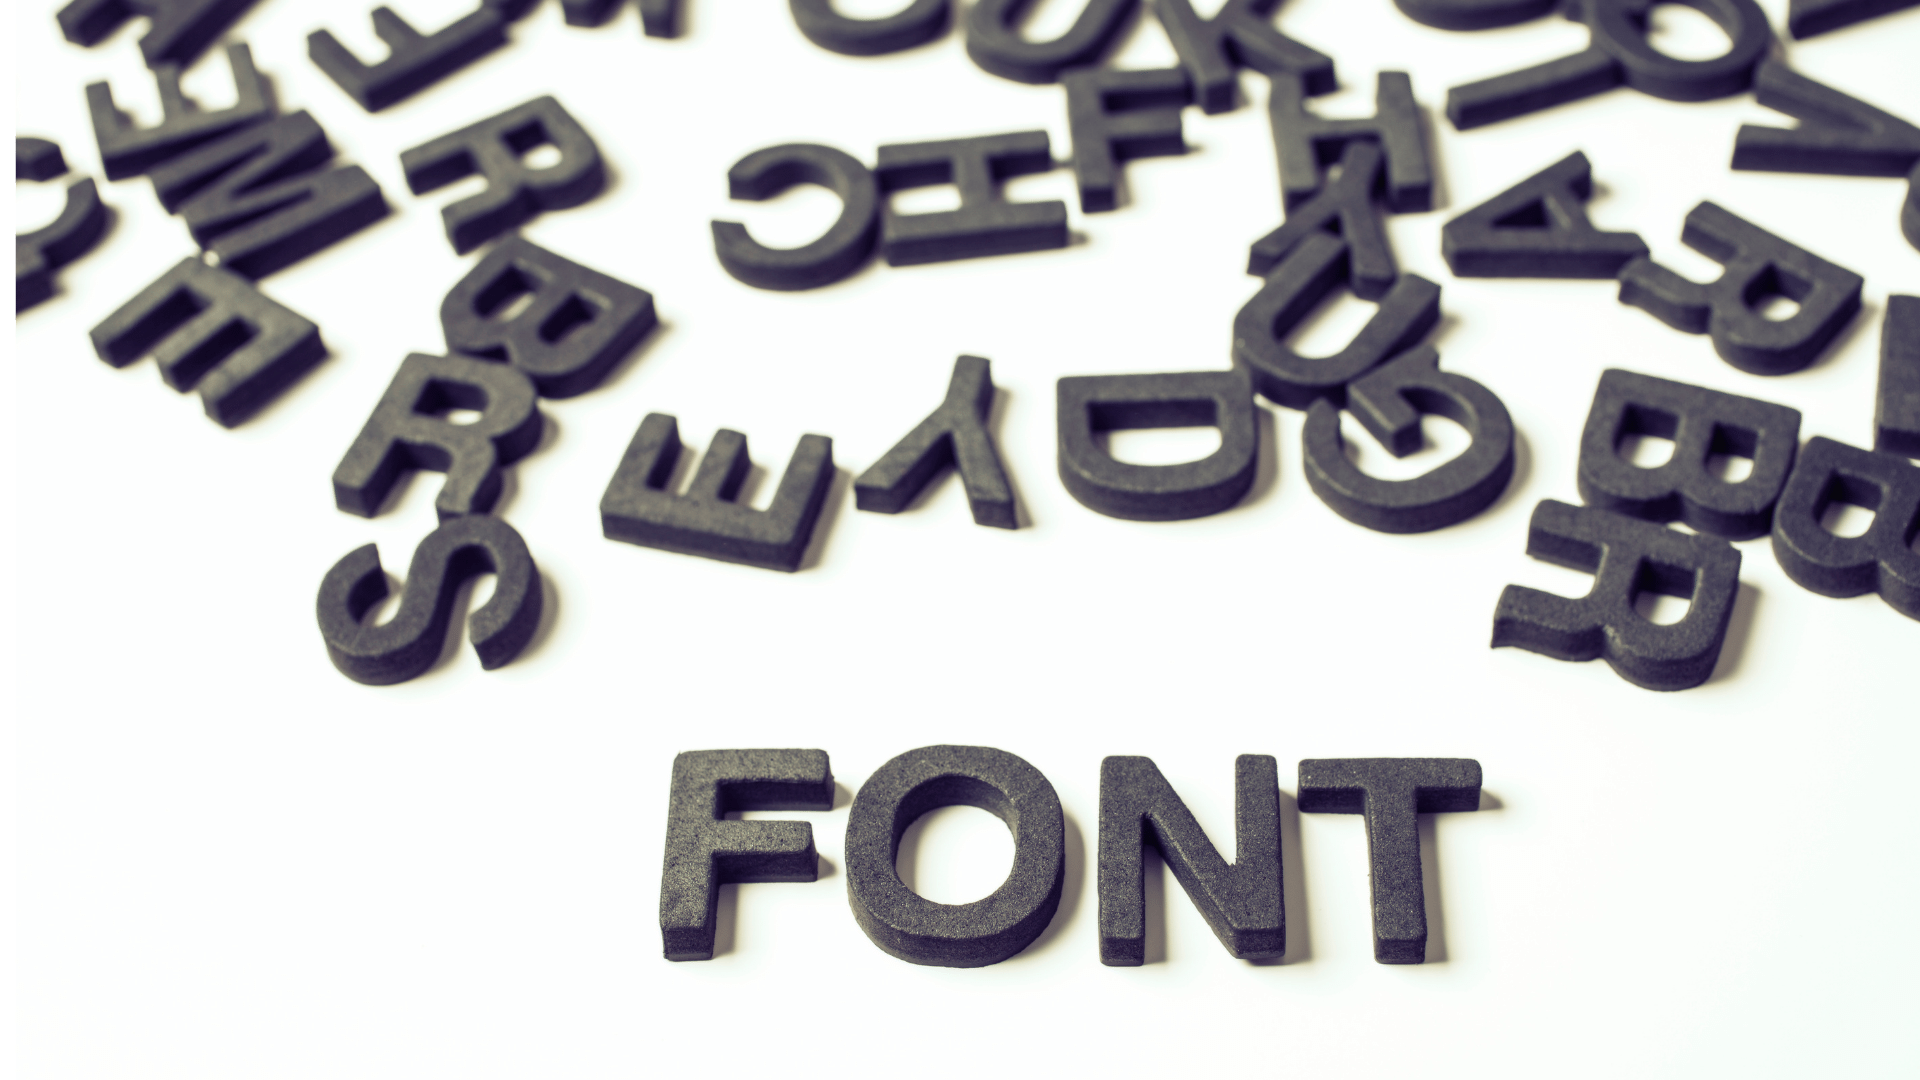 Come Funziona Font Awesome? A cosa Serve?